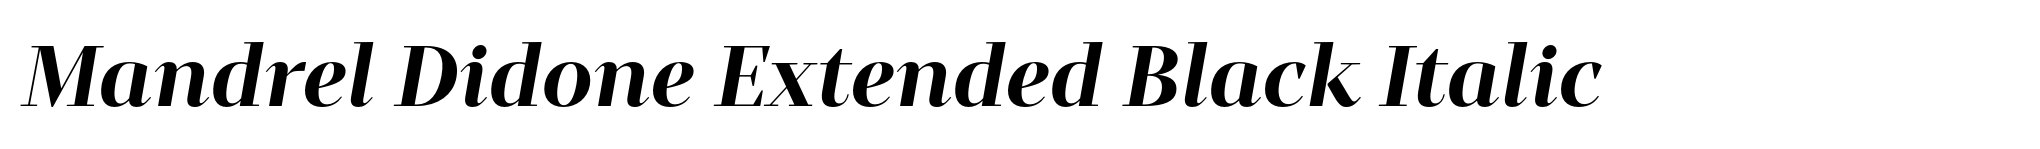 Mandrel Didone Extended Black Italic image